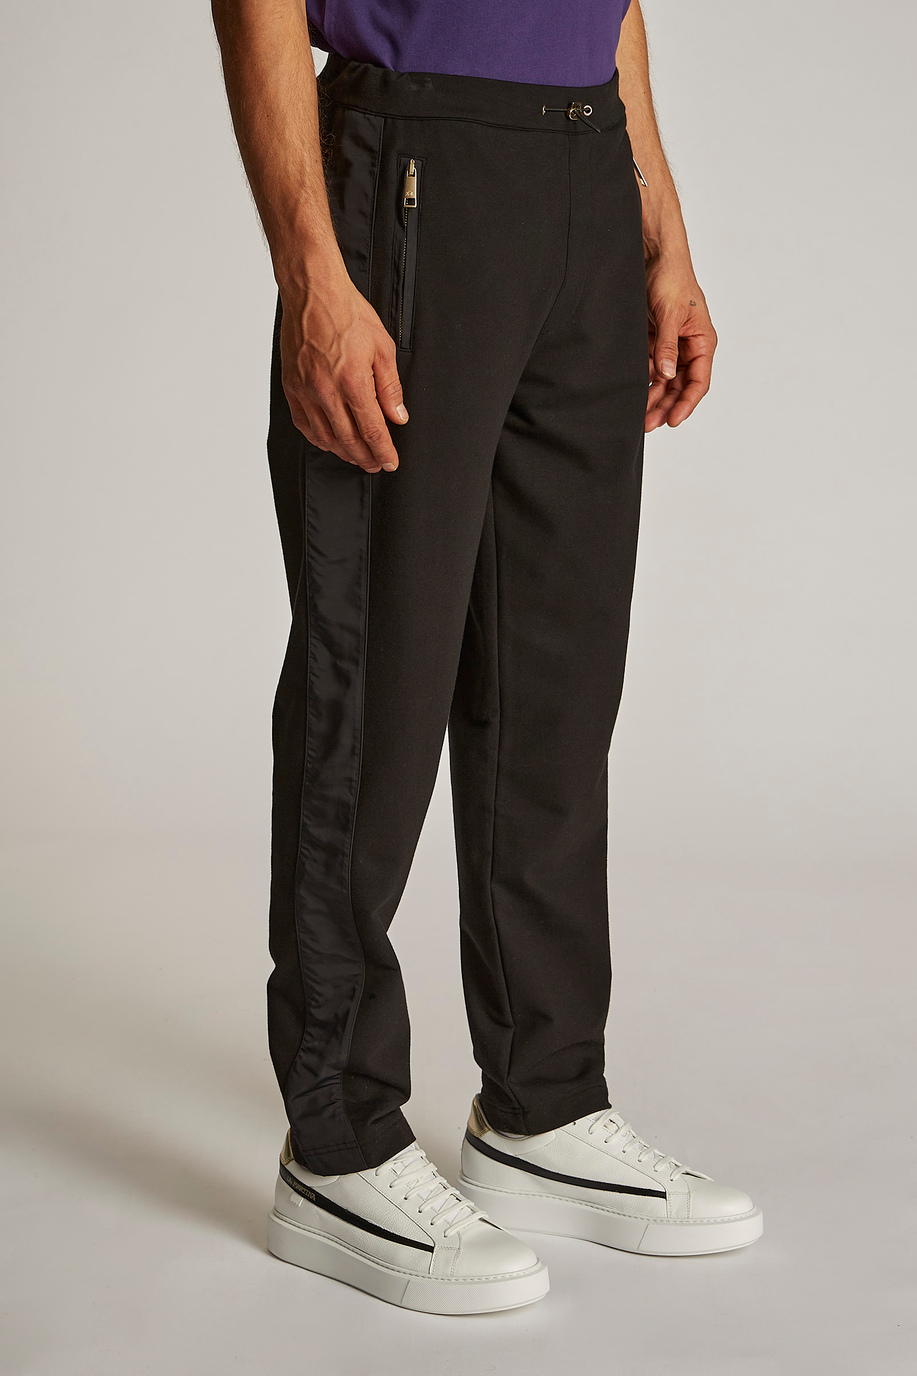 Pantalón de hombre modelo jogger de algodón elástico, corte regular - Jet Set | La Martina - Official Online Shop